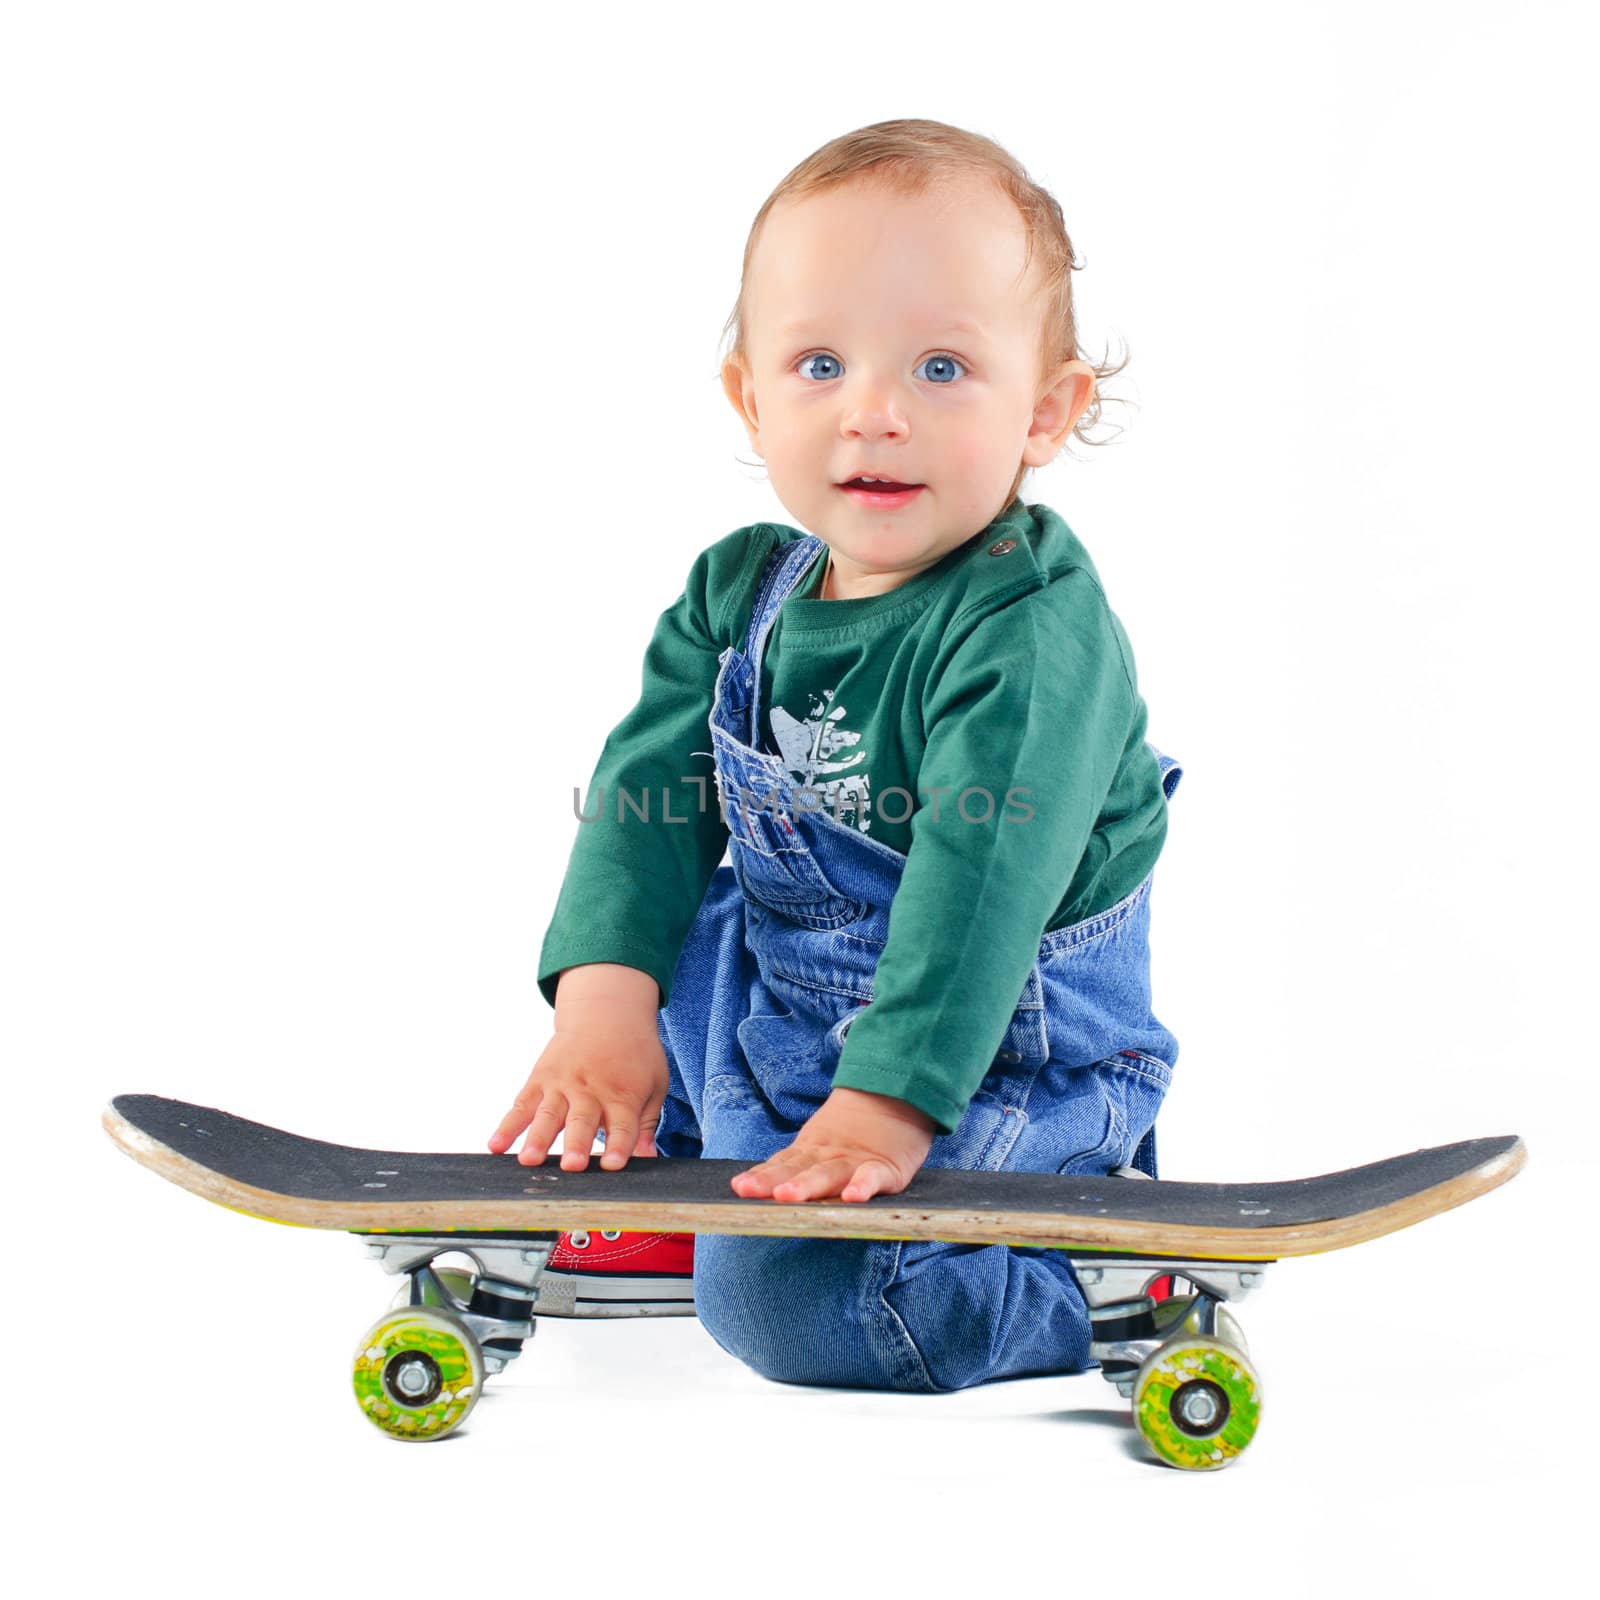 Cute 1 years old boy on a skateboard in the studio